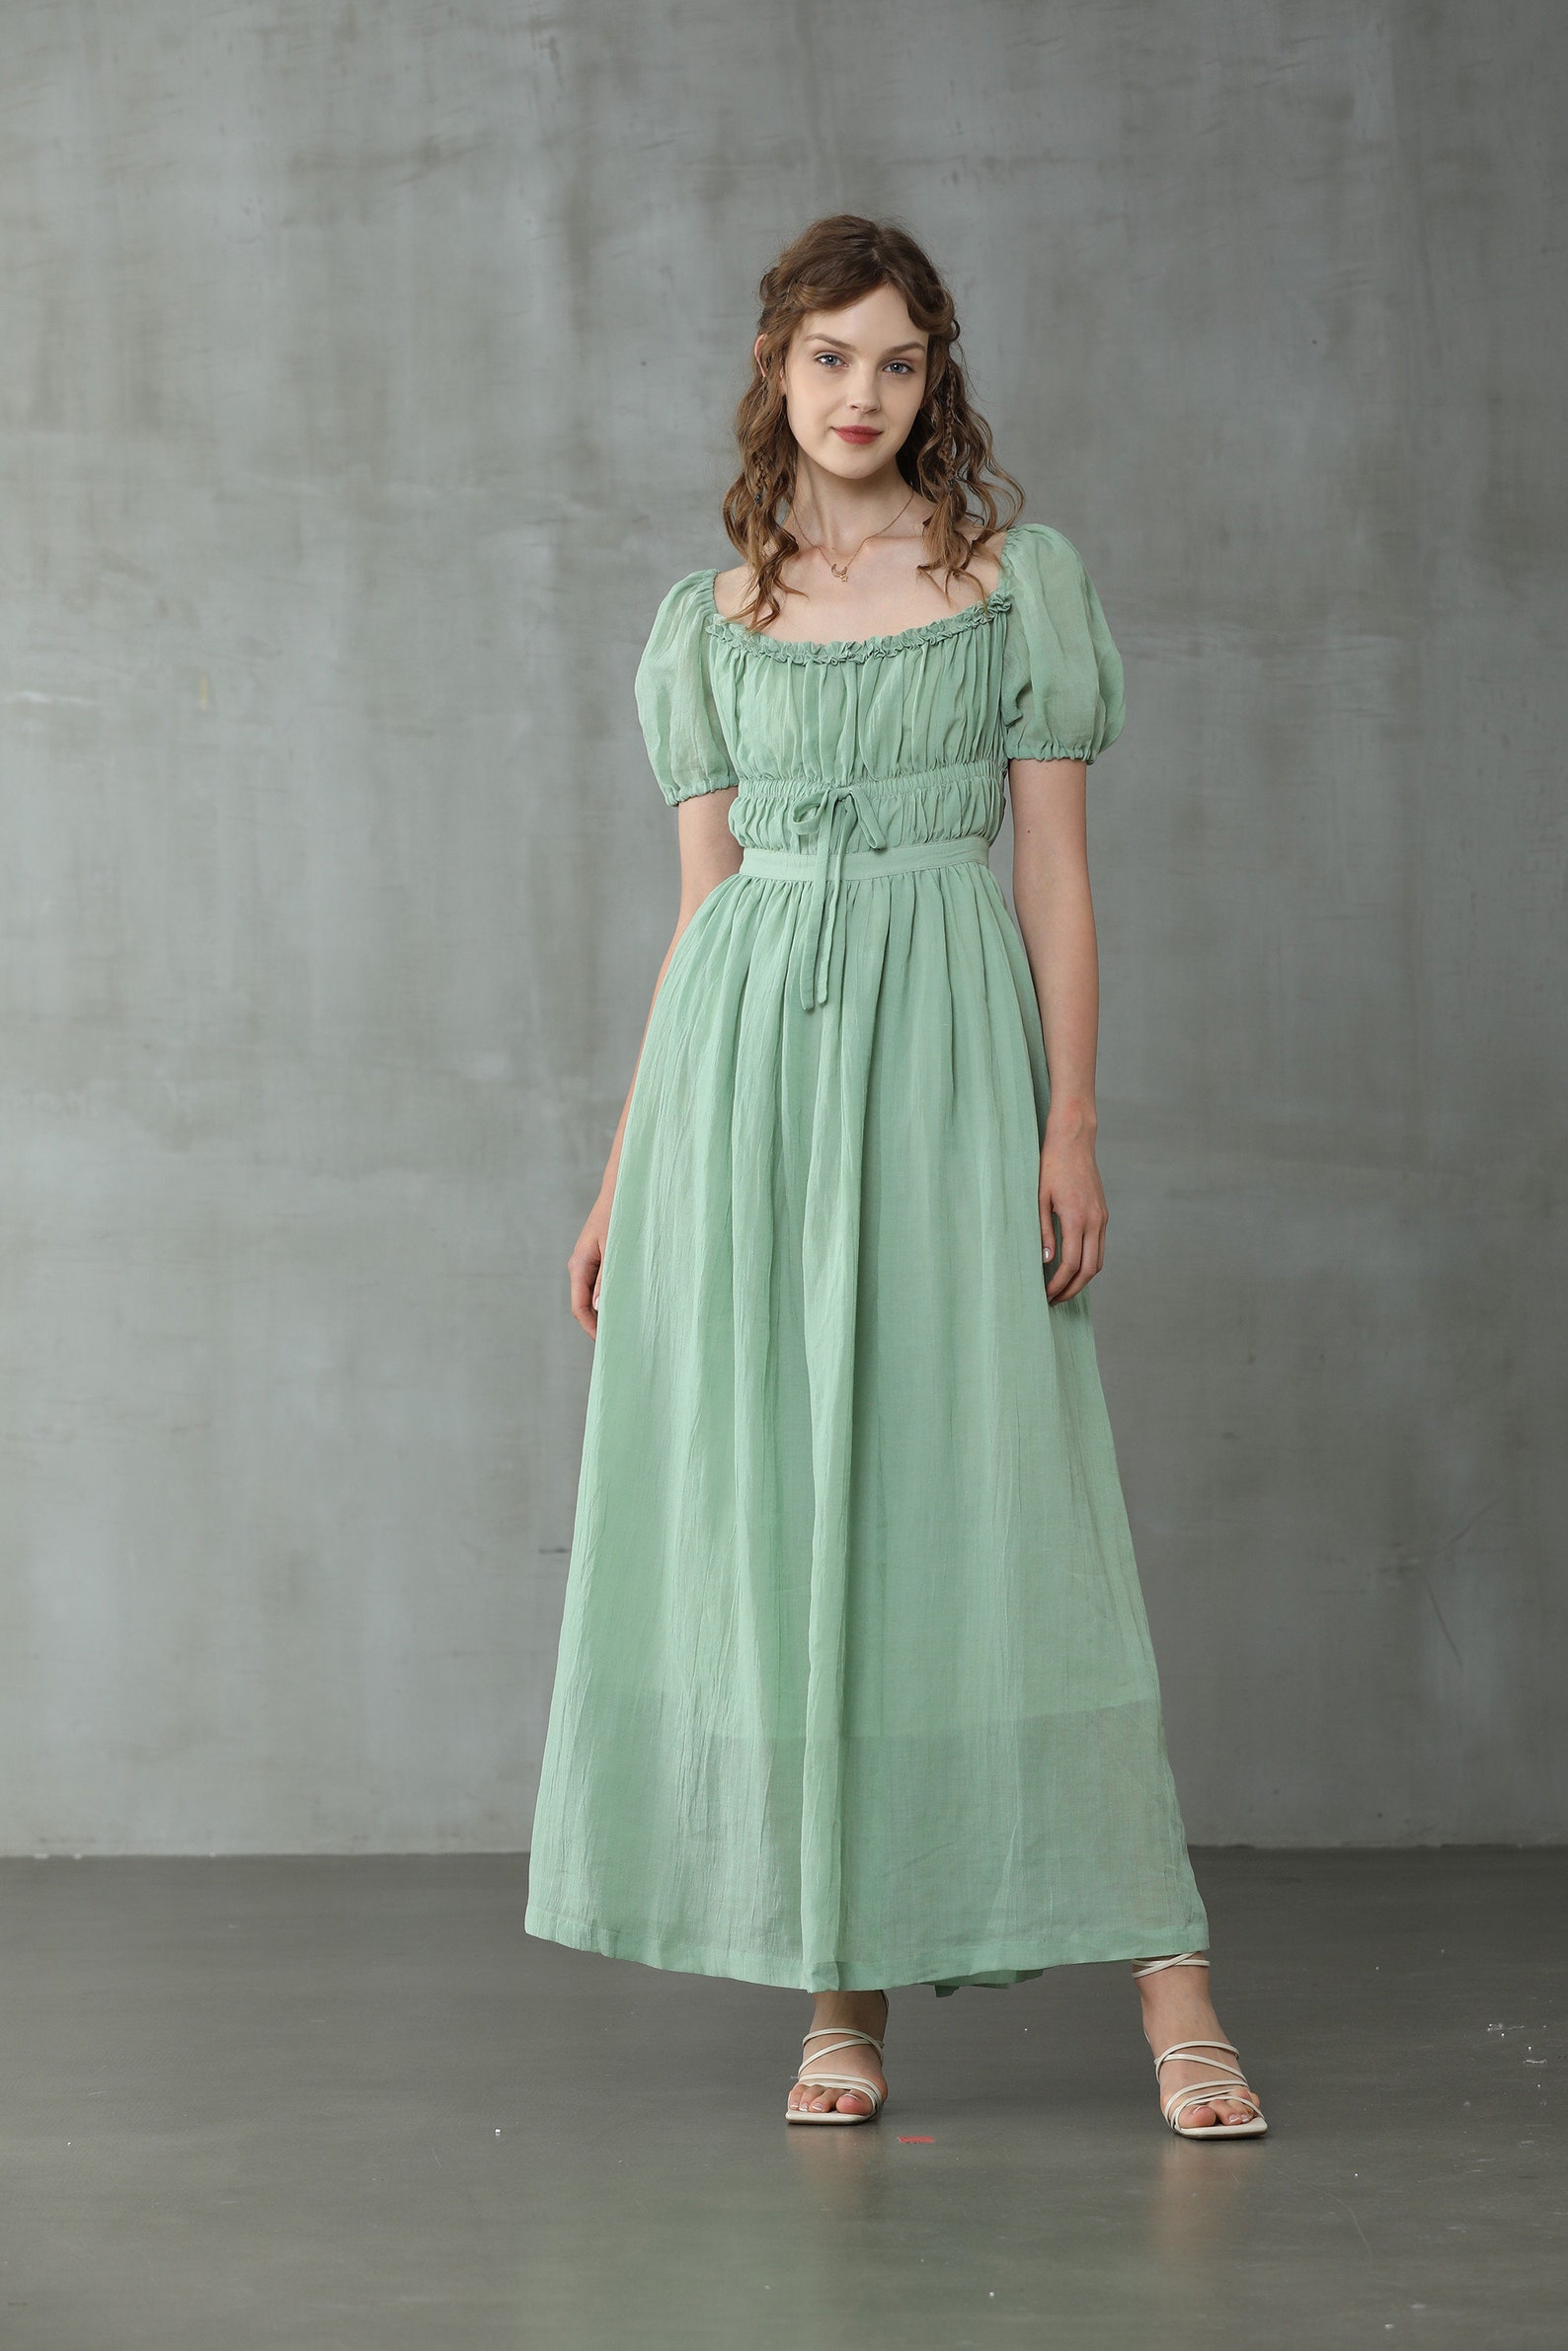 Maxi Linen Dress in Turquoise Ruffle Dress Bridal Dress | Etsy